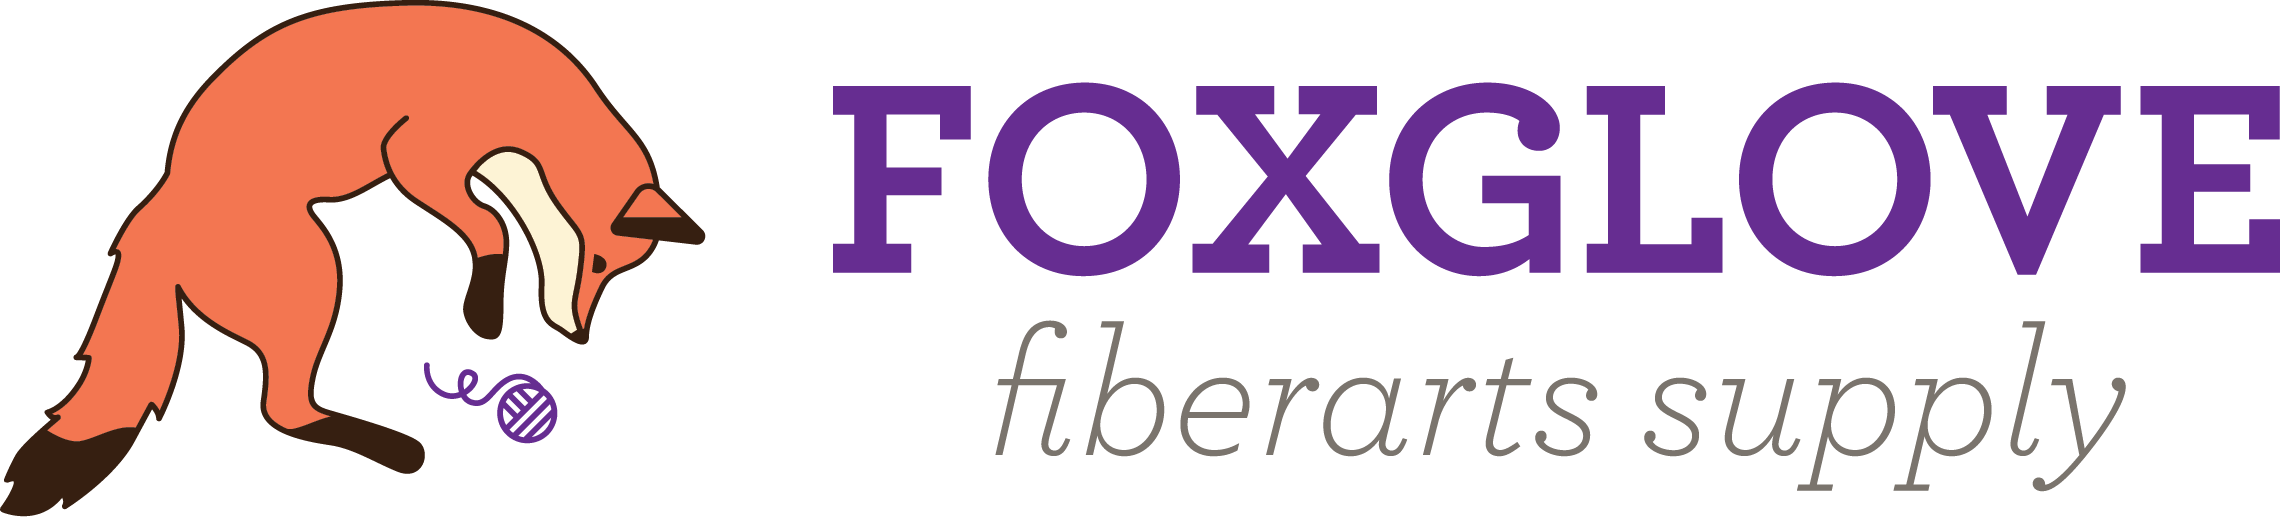 foxglove-fiberarts-supply-logo-horizontal